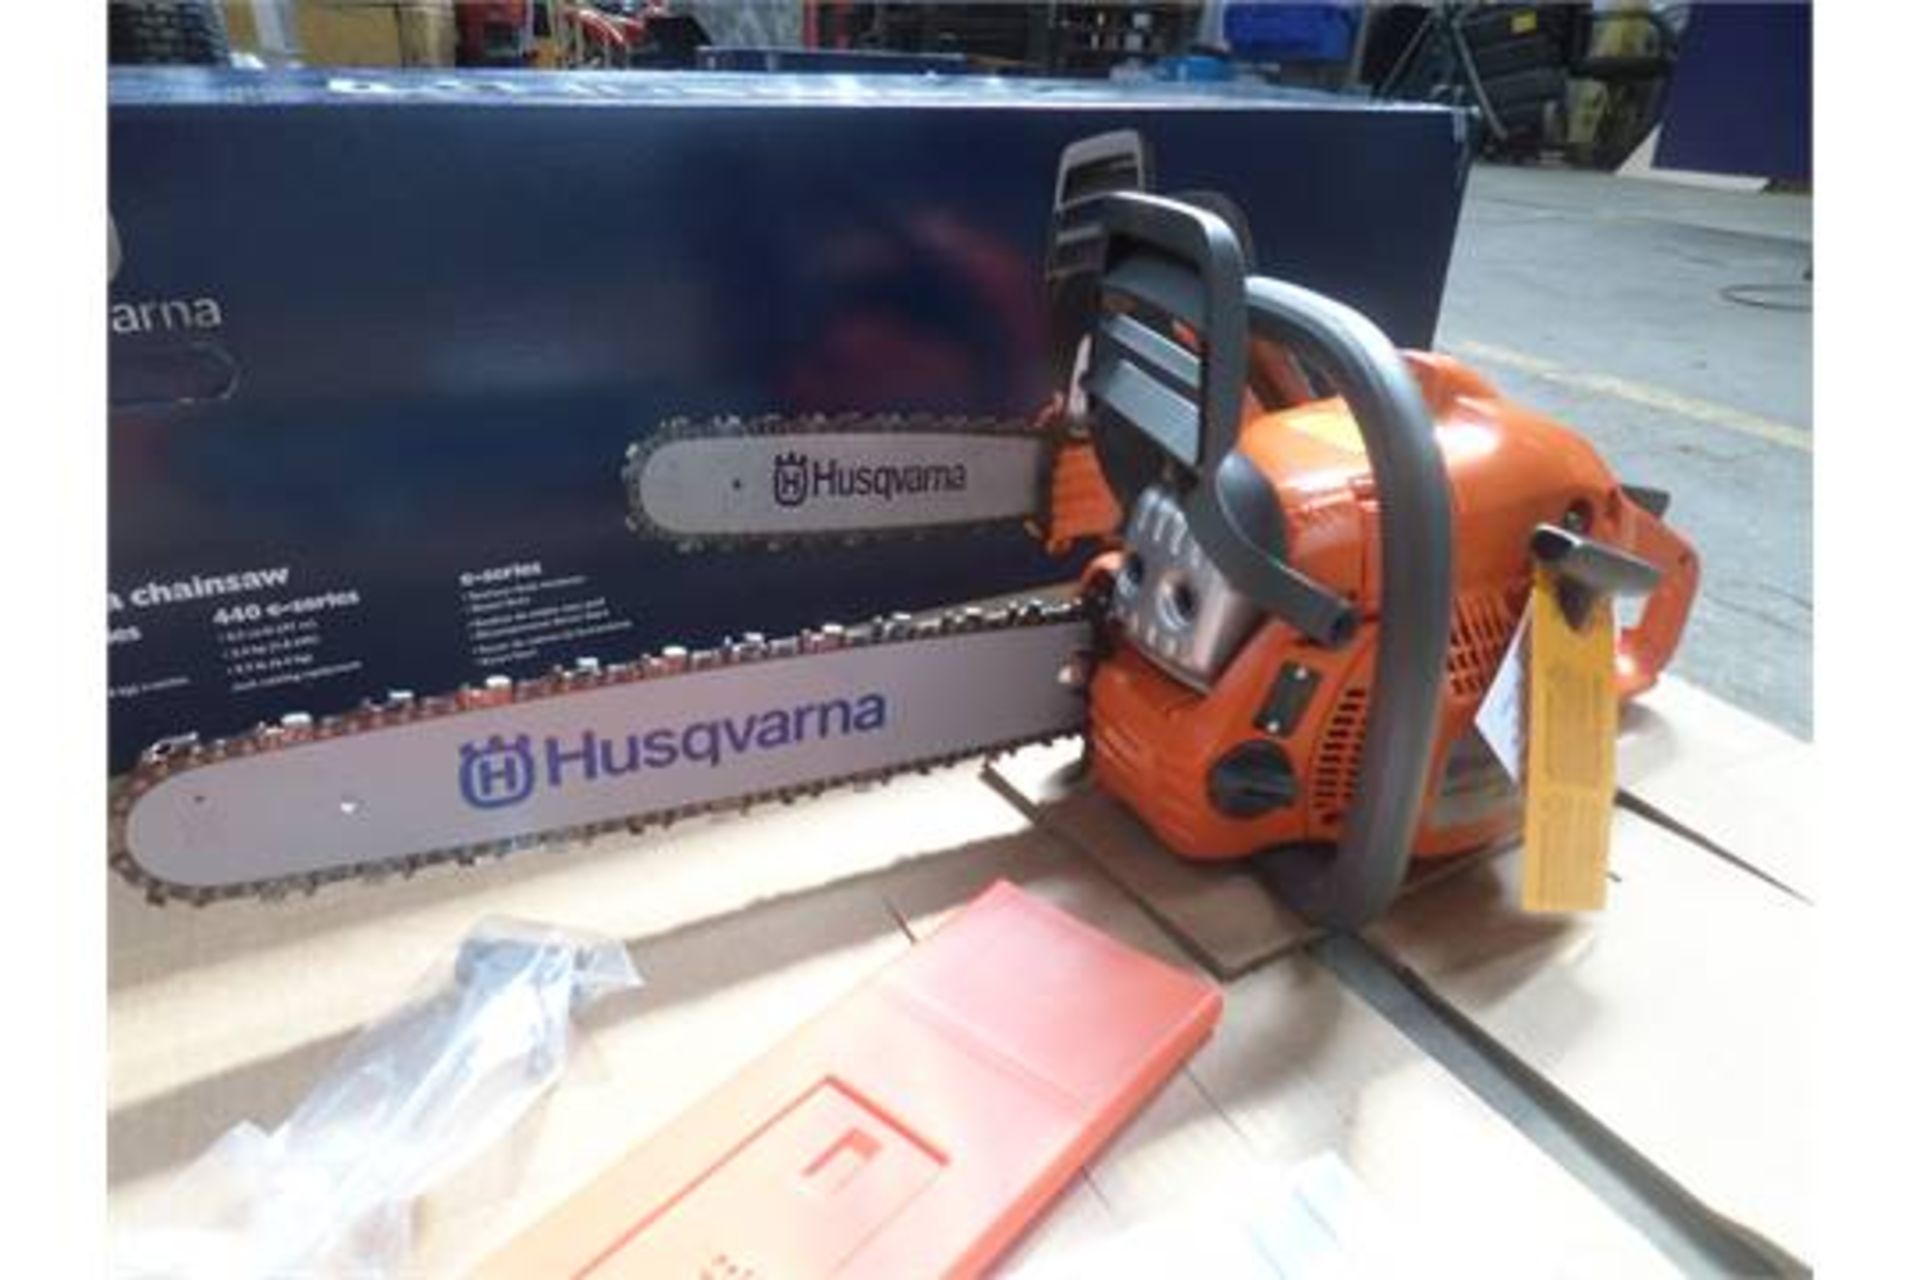 Husqvarna Chainsaw, 40.9 cc, 2.2 hp, 16", 9.2 lbs, Lightweight Quality Construction - Image 3 of 3